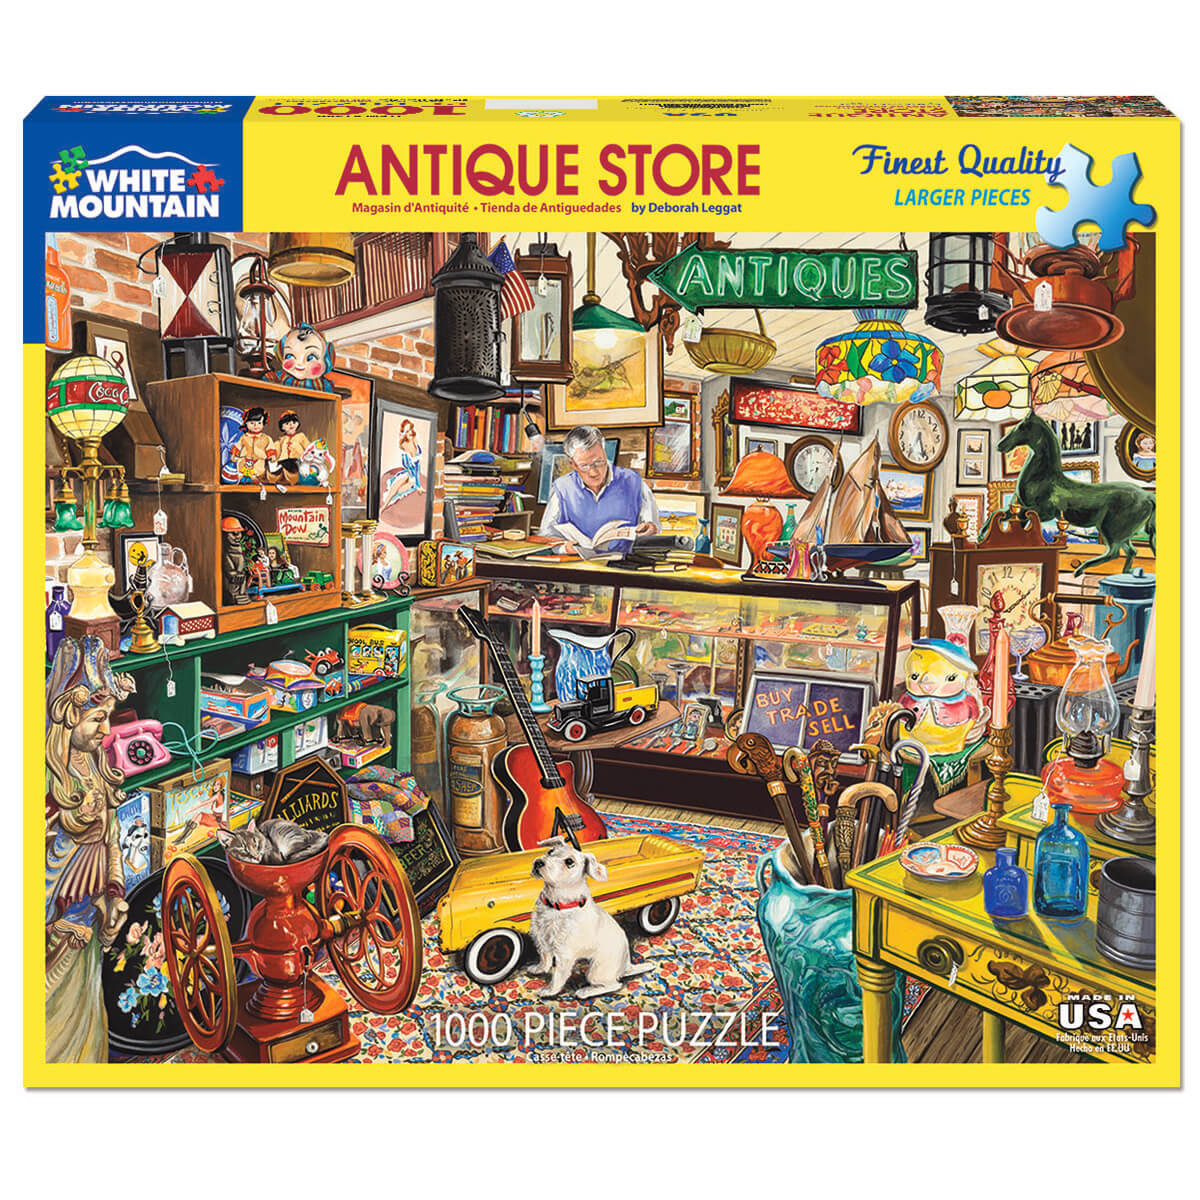 White Mountain Puzzles Antique Store 1000 Piece Jigsaw Puzzle